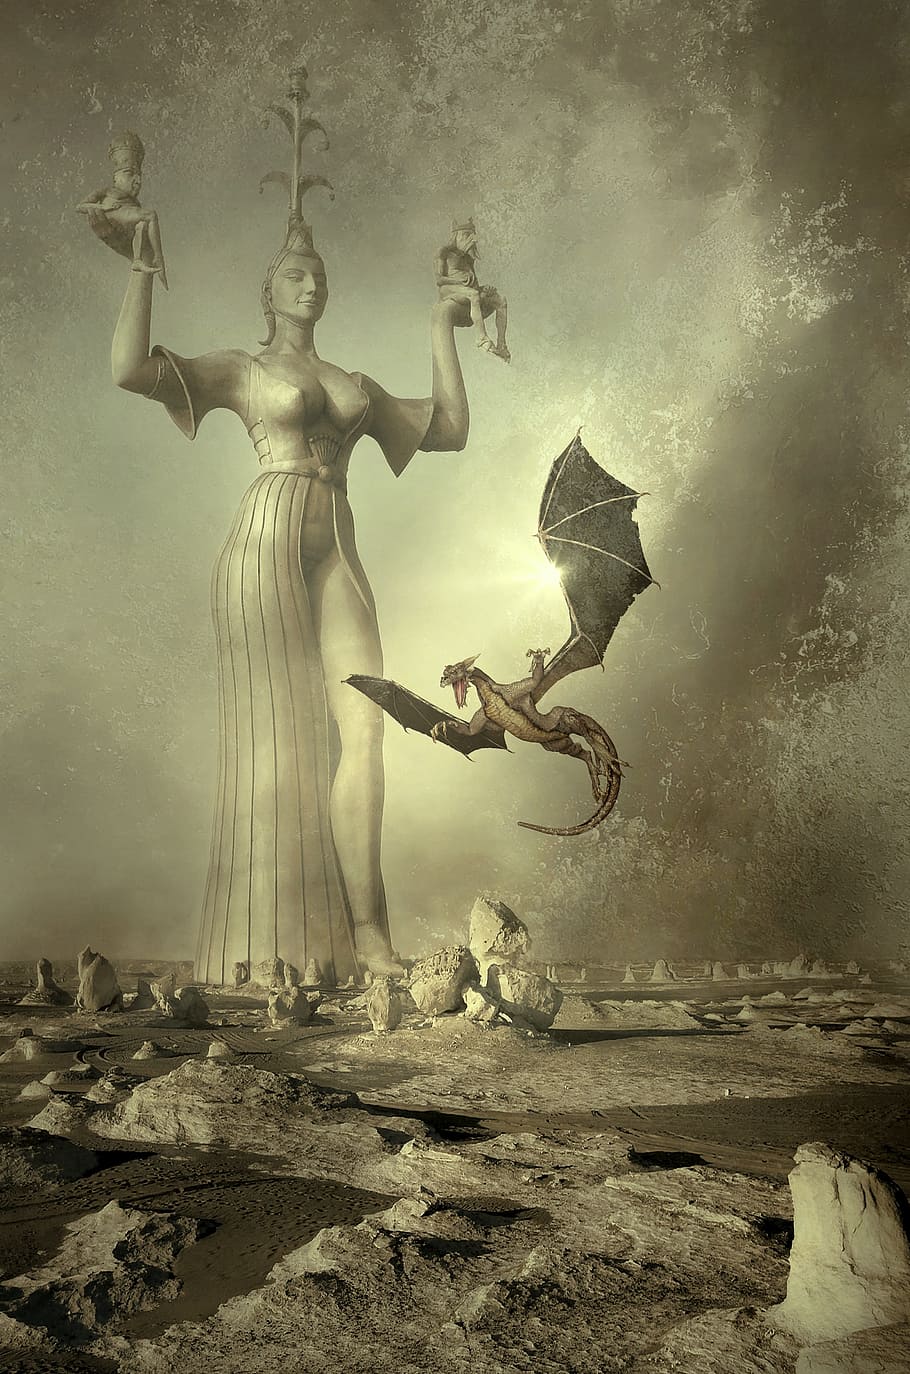 dragon flying near statue illustration, fantasy, book cover, landscape